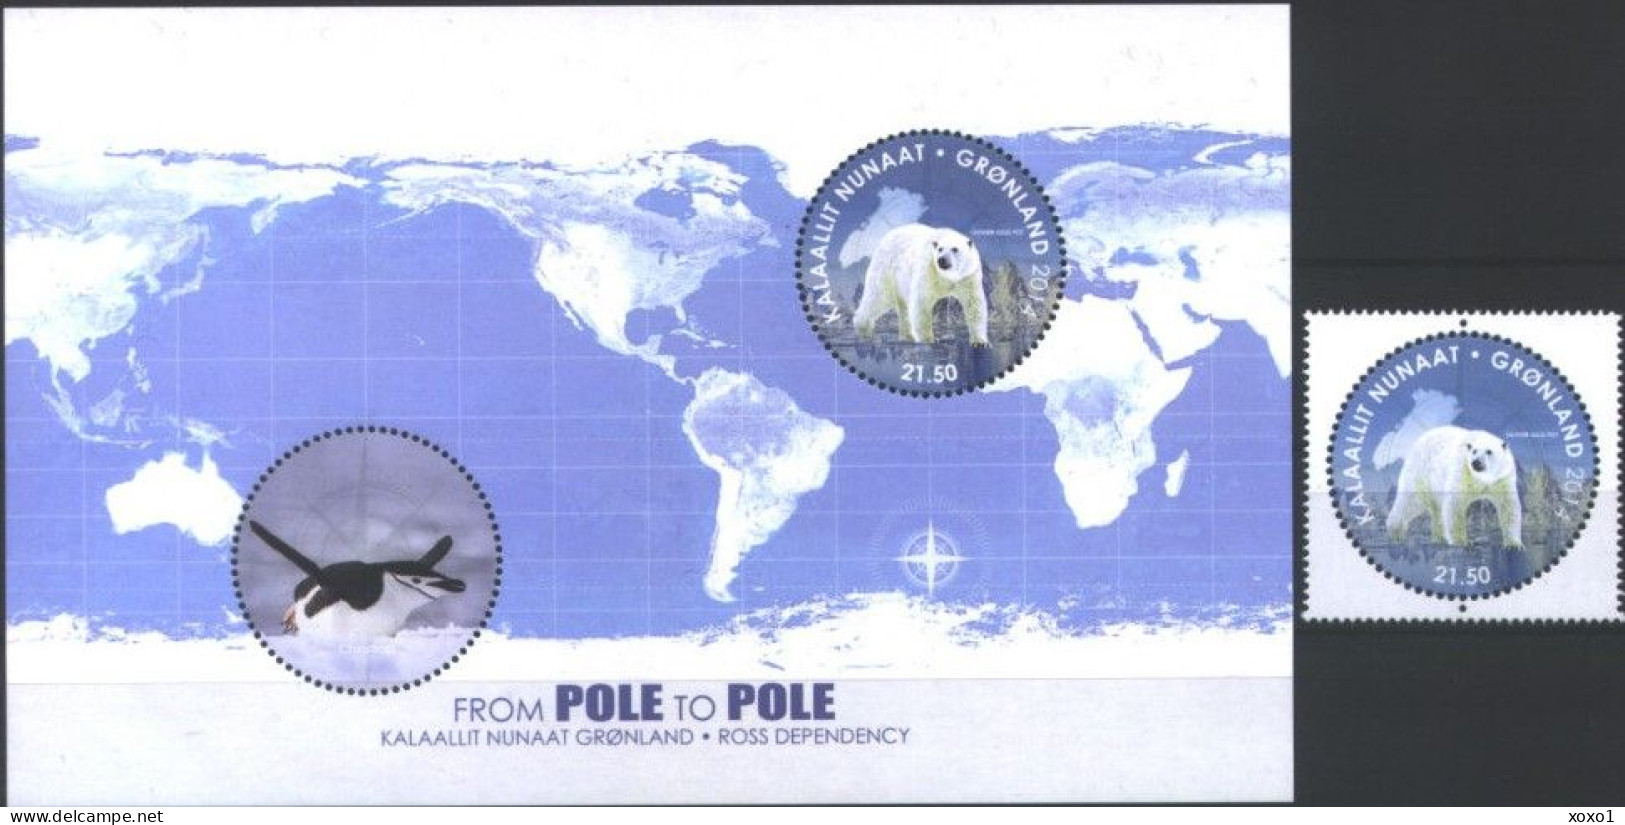 Greenland 2014 MiNr. 680 (Block 70) Dänemark Grönland Ross Antarctica Pole Bears BIRDS Penguins 1v + S\sh MNH** 13.00 € - Fauna ártica